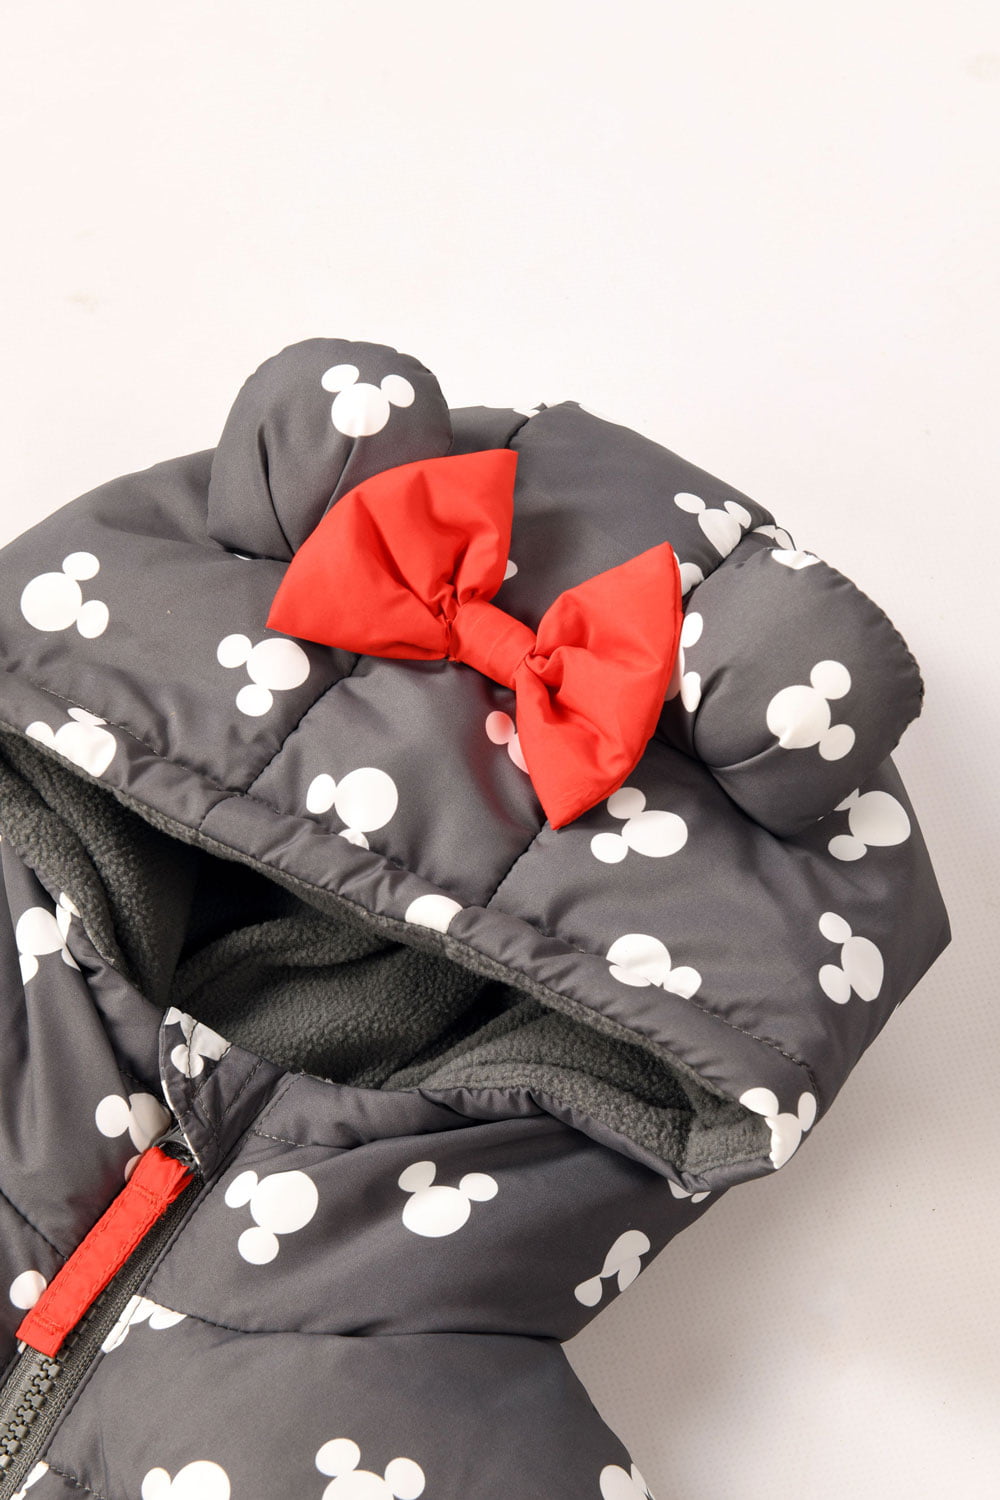 Disney Minnie Mouse Girls Outdoor Hooded Zip Coat - Brand Threads